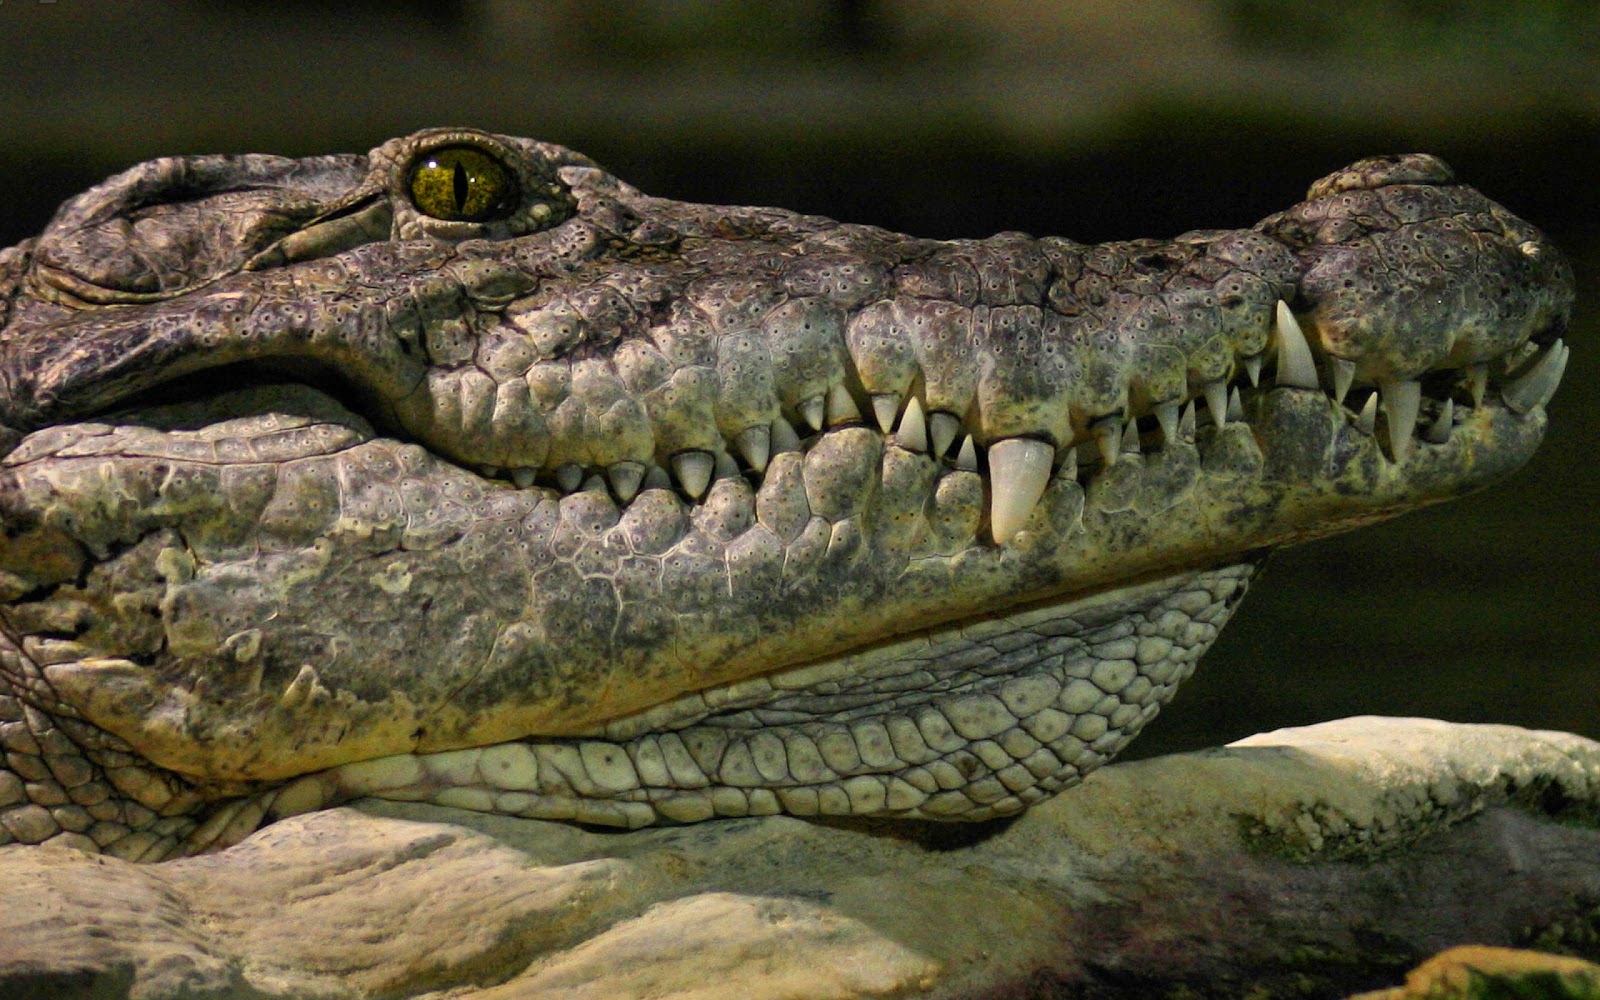 HD Crocodile Wallpaper With A Portrait Picture Of